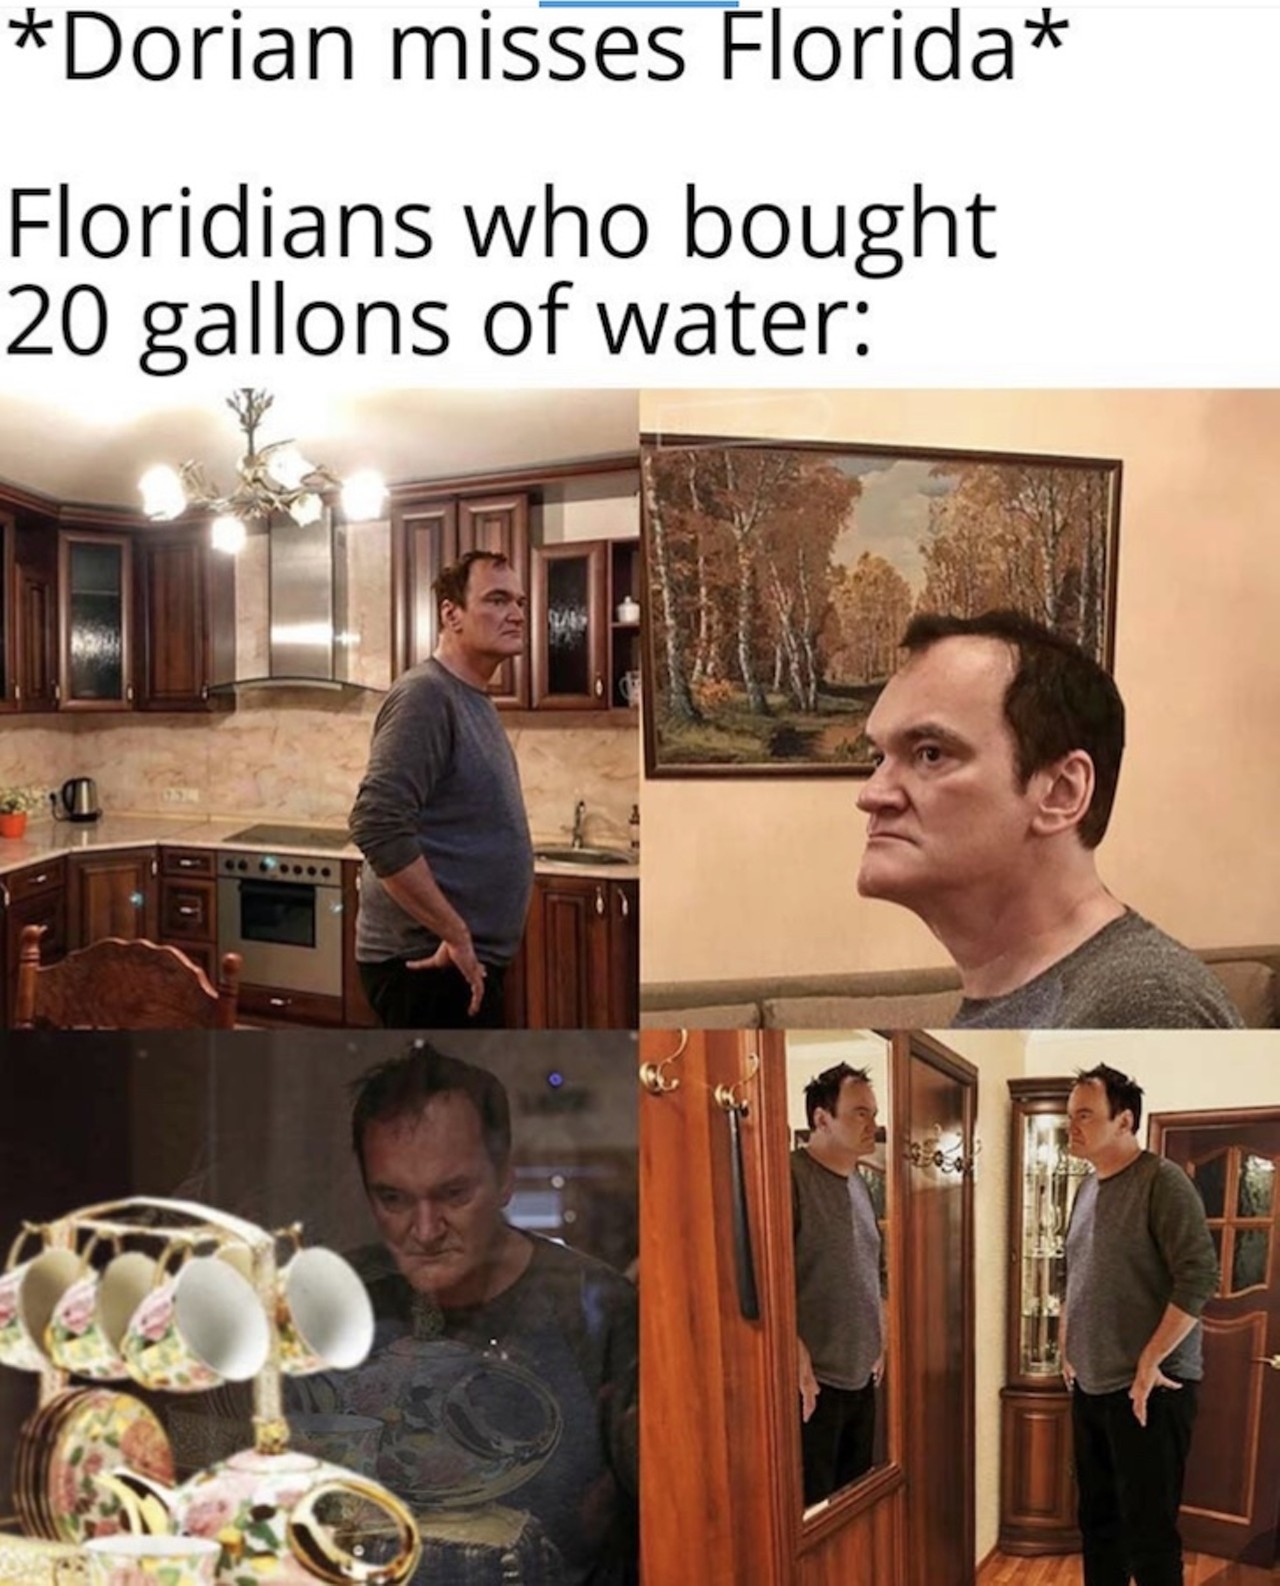 A surge of pointless Hurricane Dorian memes have already hit Florida